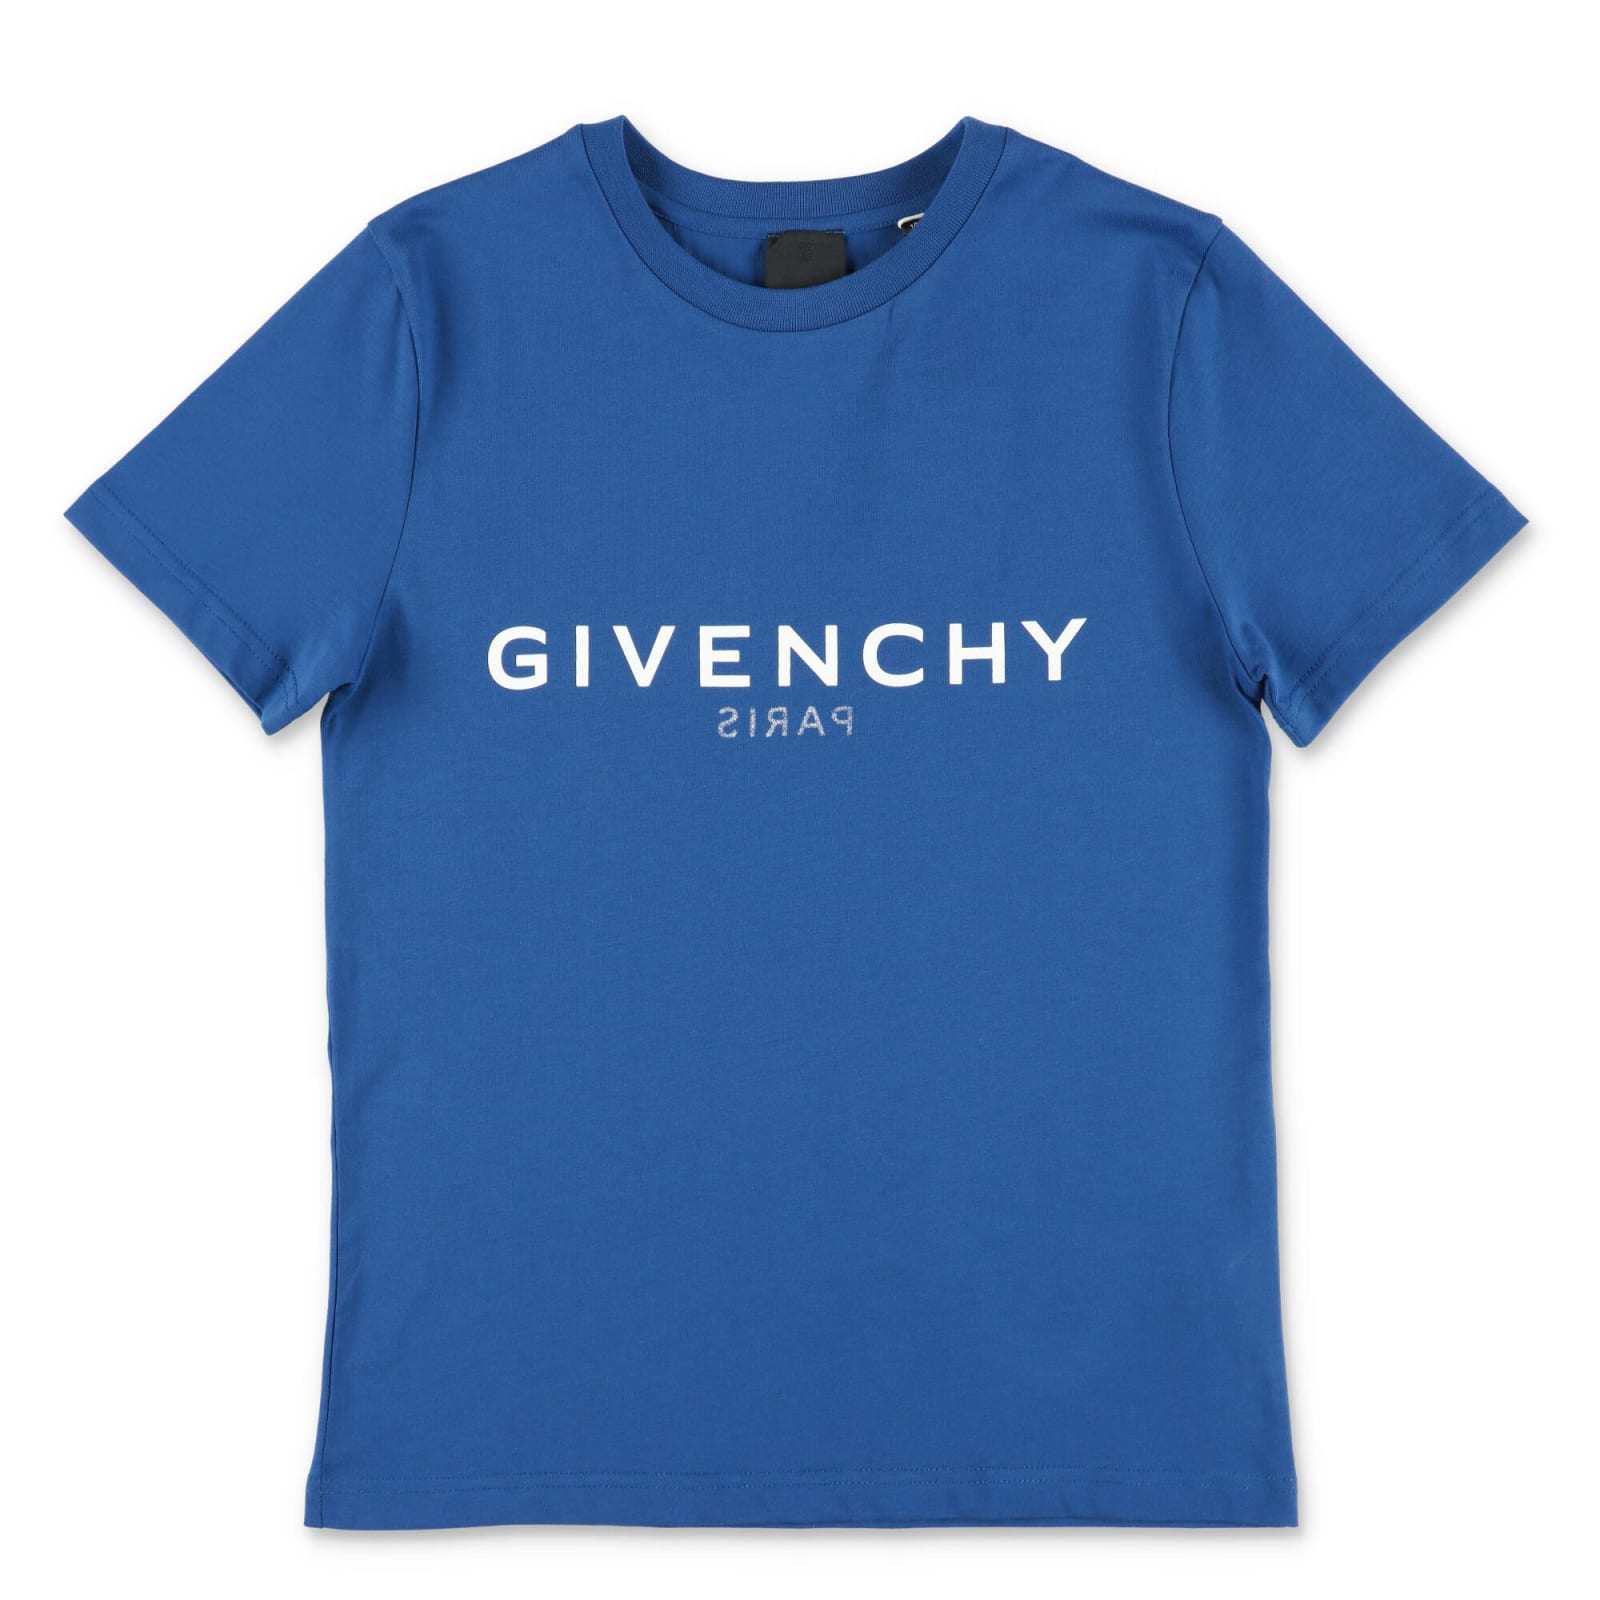 Givenchy T-shirt Blu Royal In Jersey Di Cotone Bambino